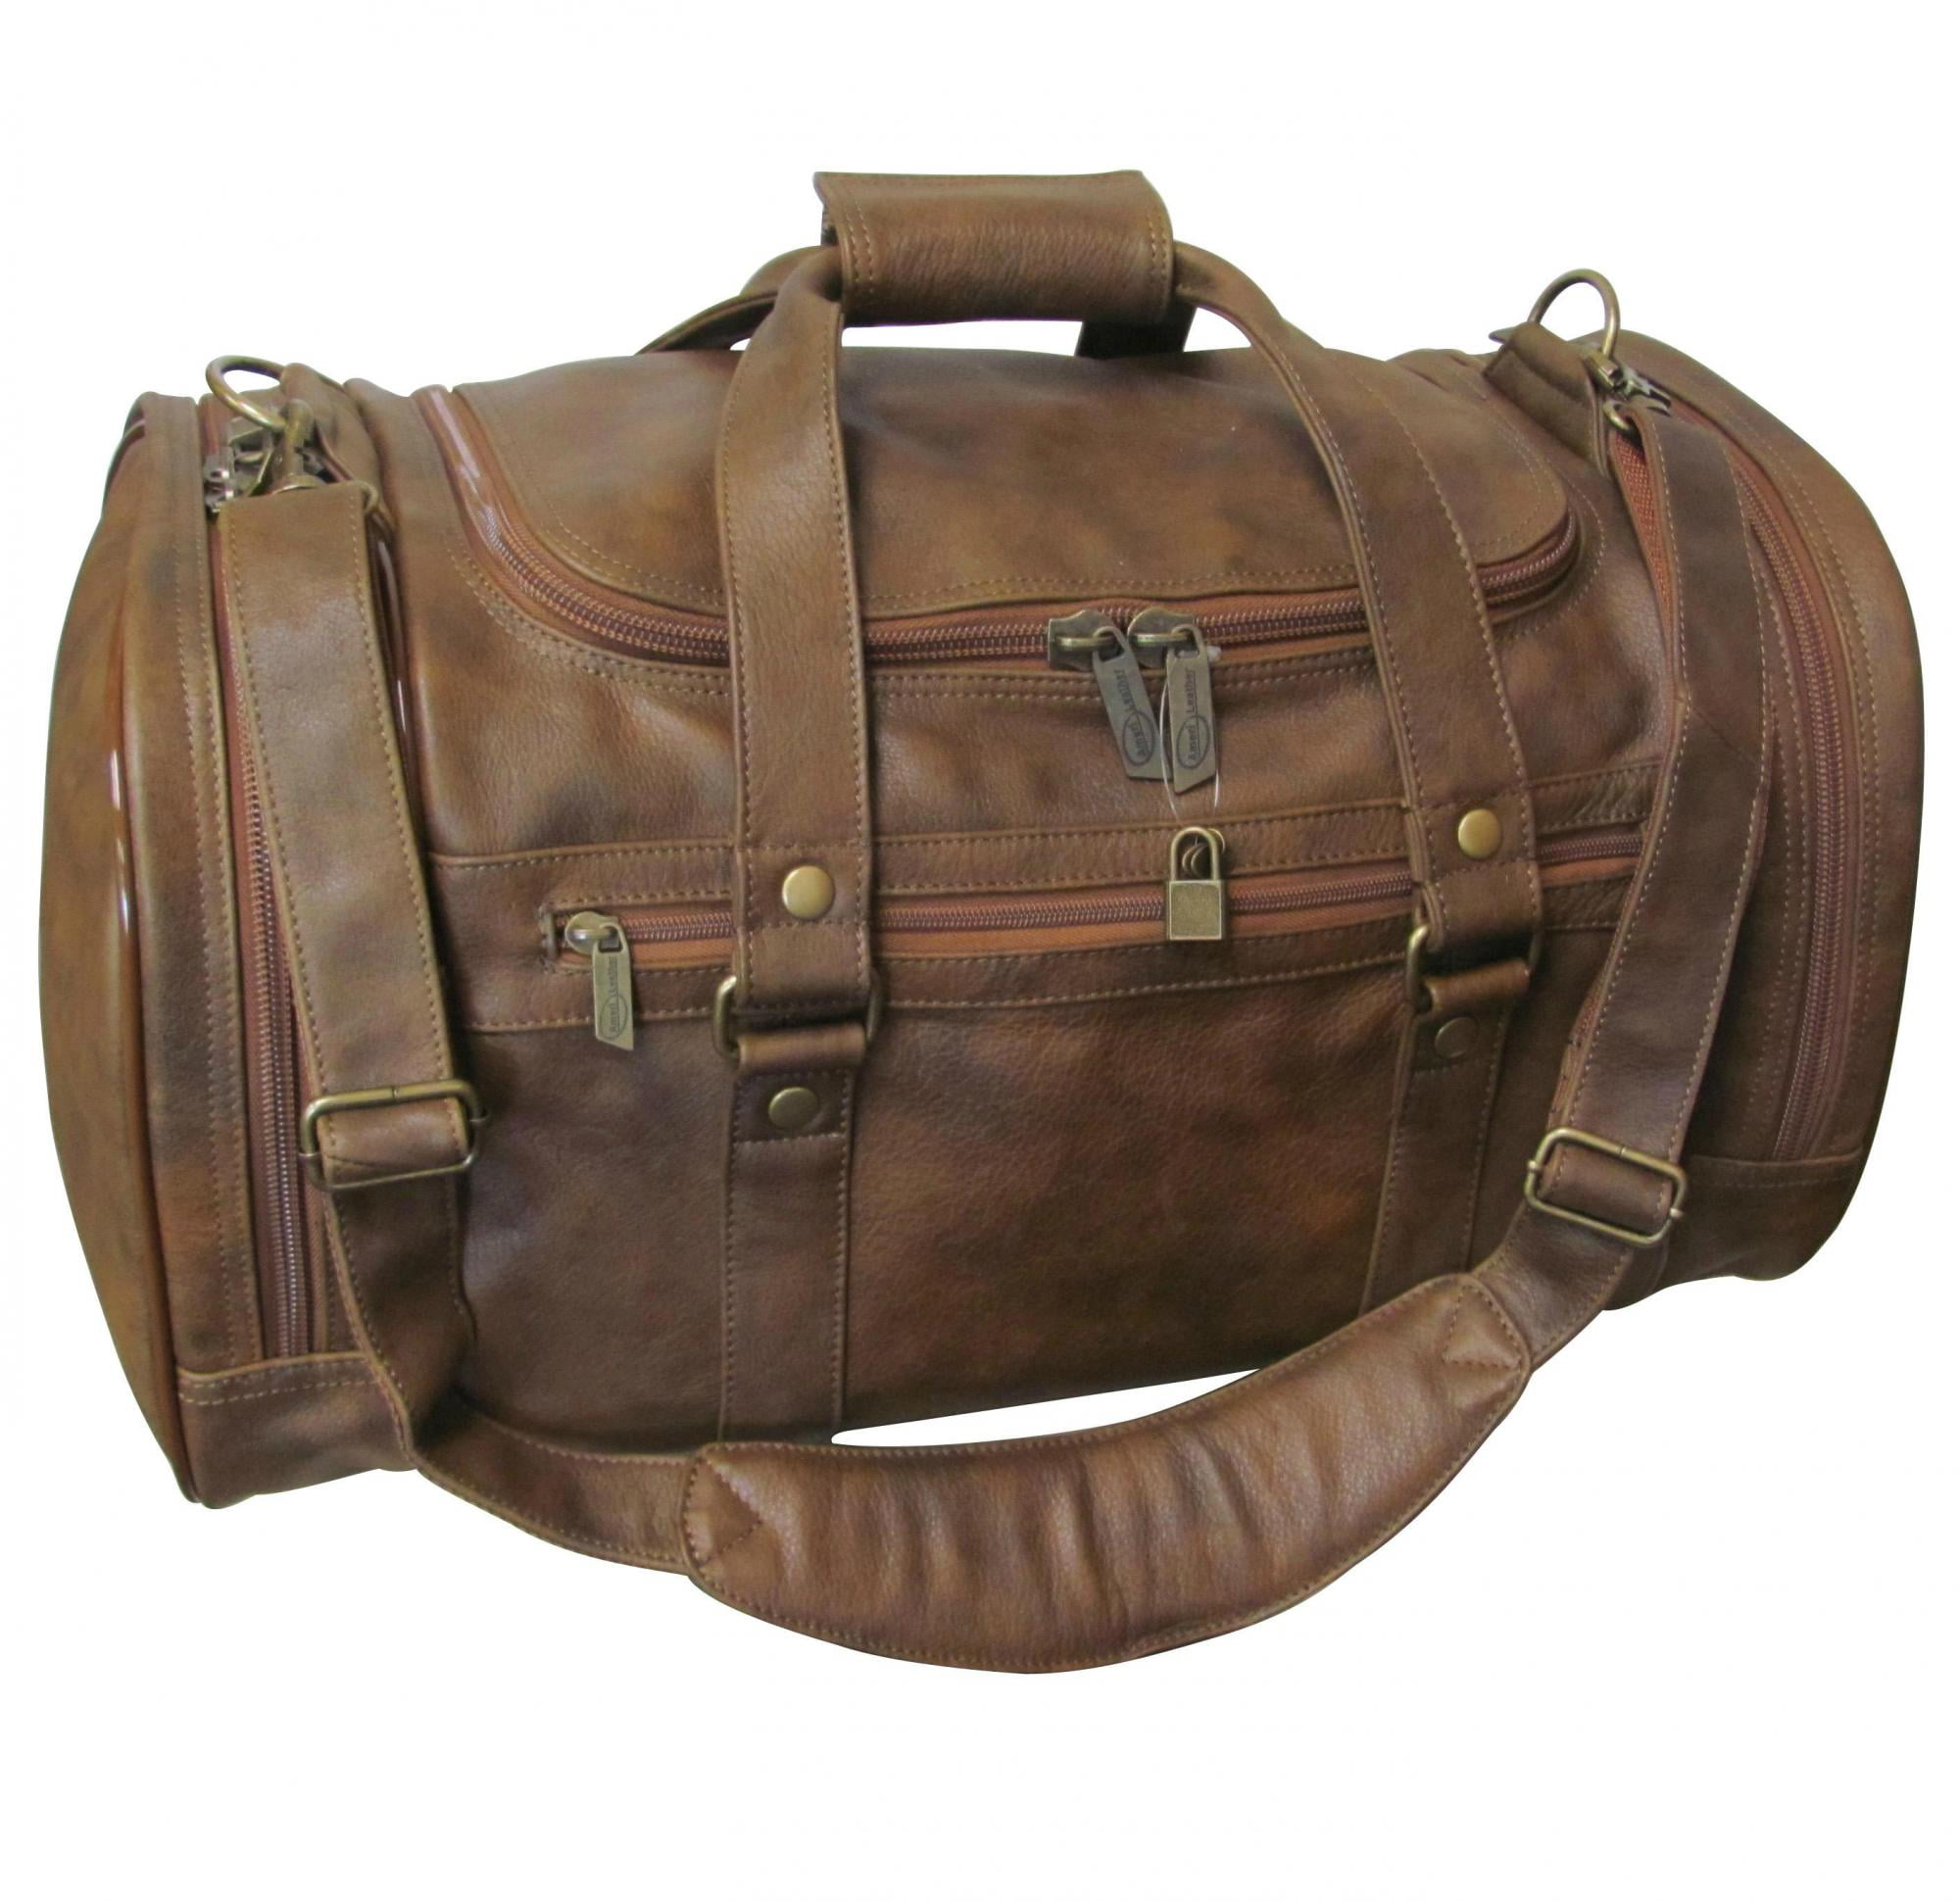 Men's Leather Handmade Vintage Duffle Luggage Weekend Gym Overnight Travel Bag